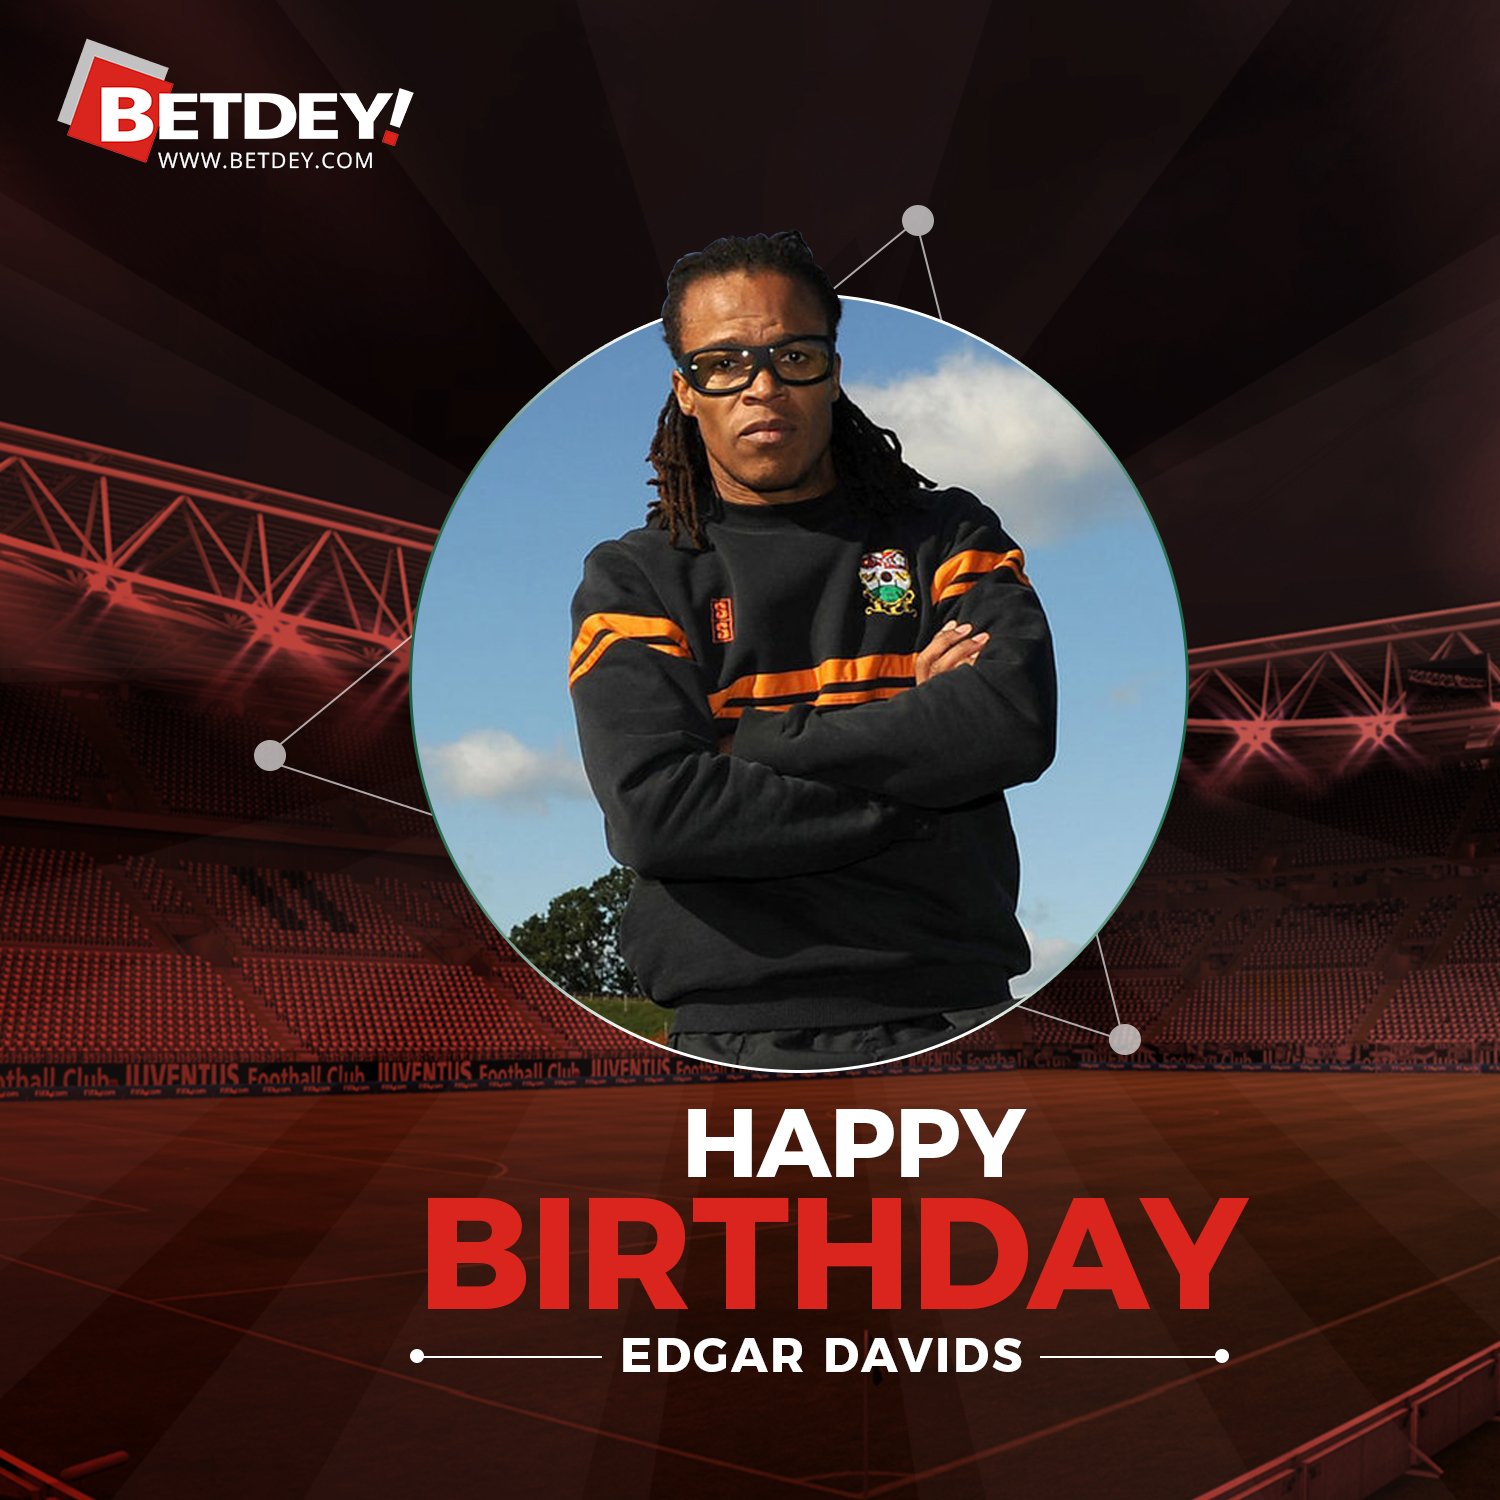 Happy birthday, Edgar Davids    